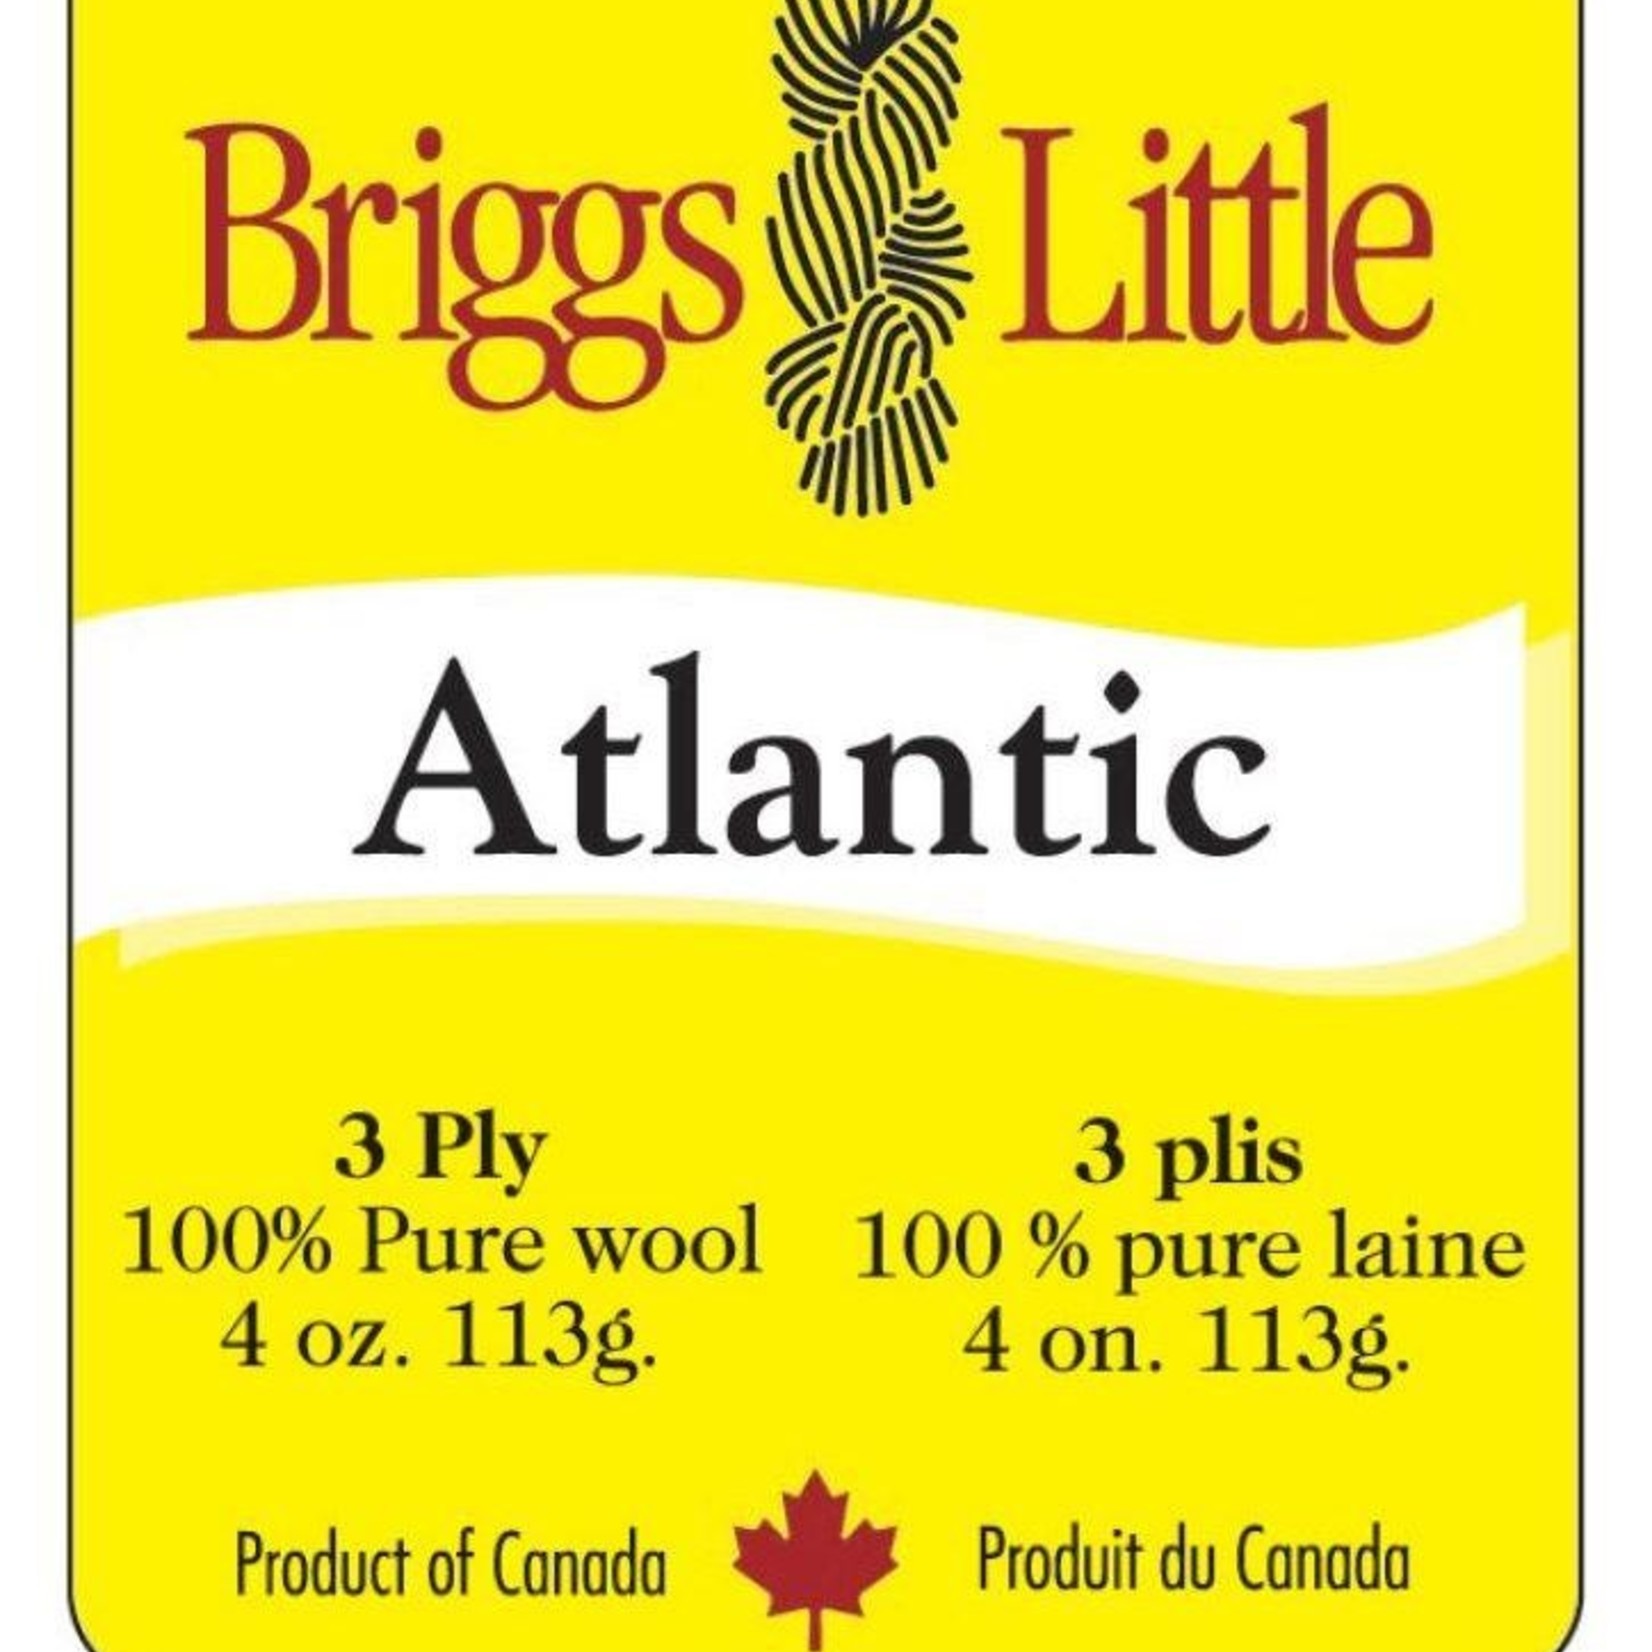 Briggs & Little Atlantic Yarn by Briggs & Little